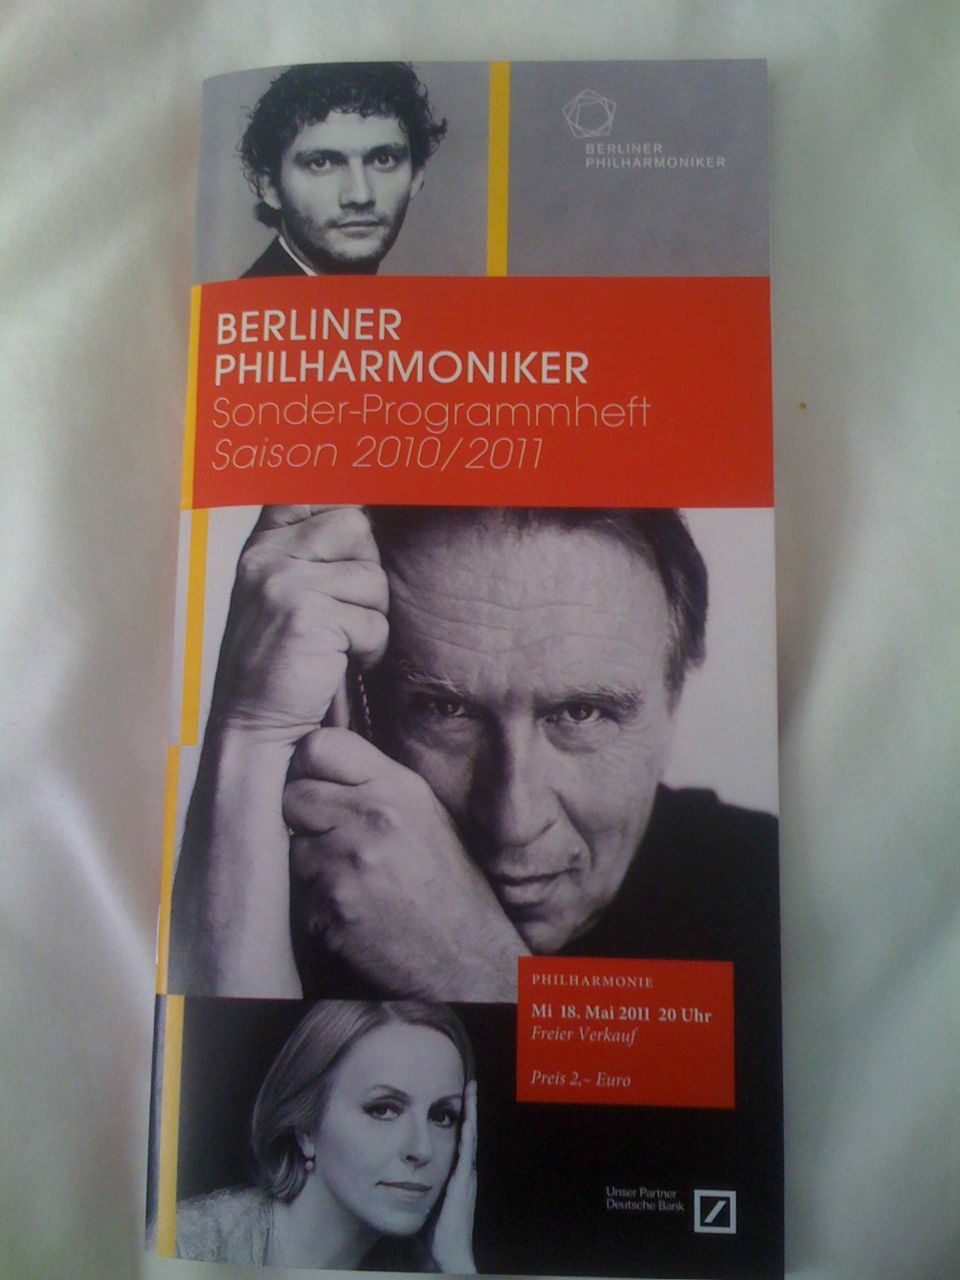 <!--:en-->Berlin Philharmonic Orchestra Homage to “Mahler”<!--:-->